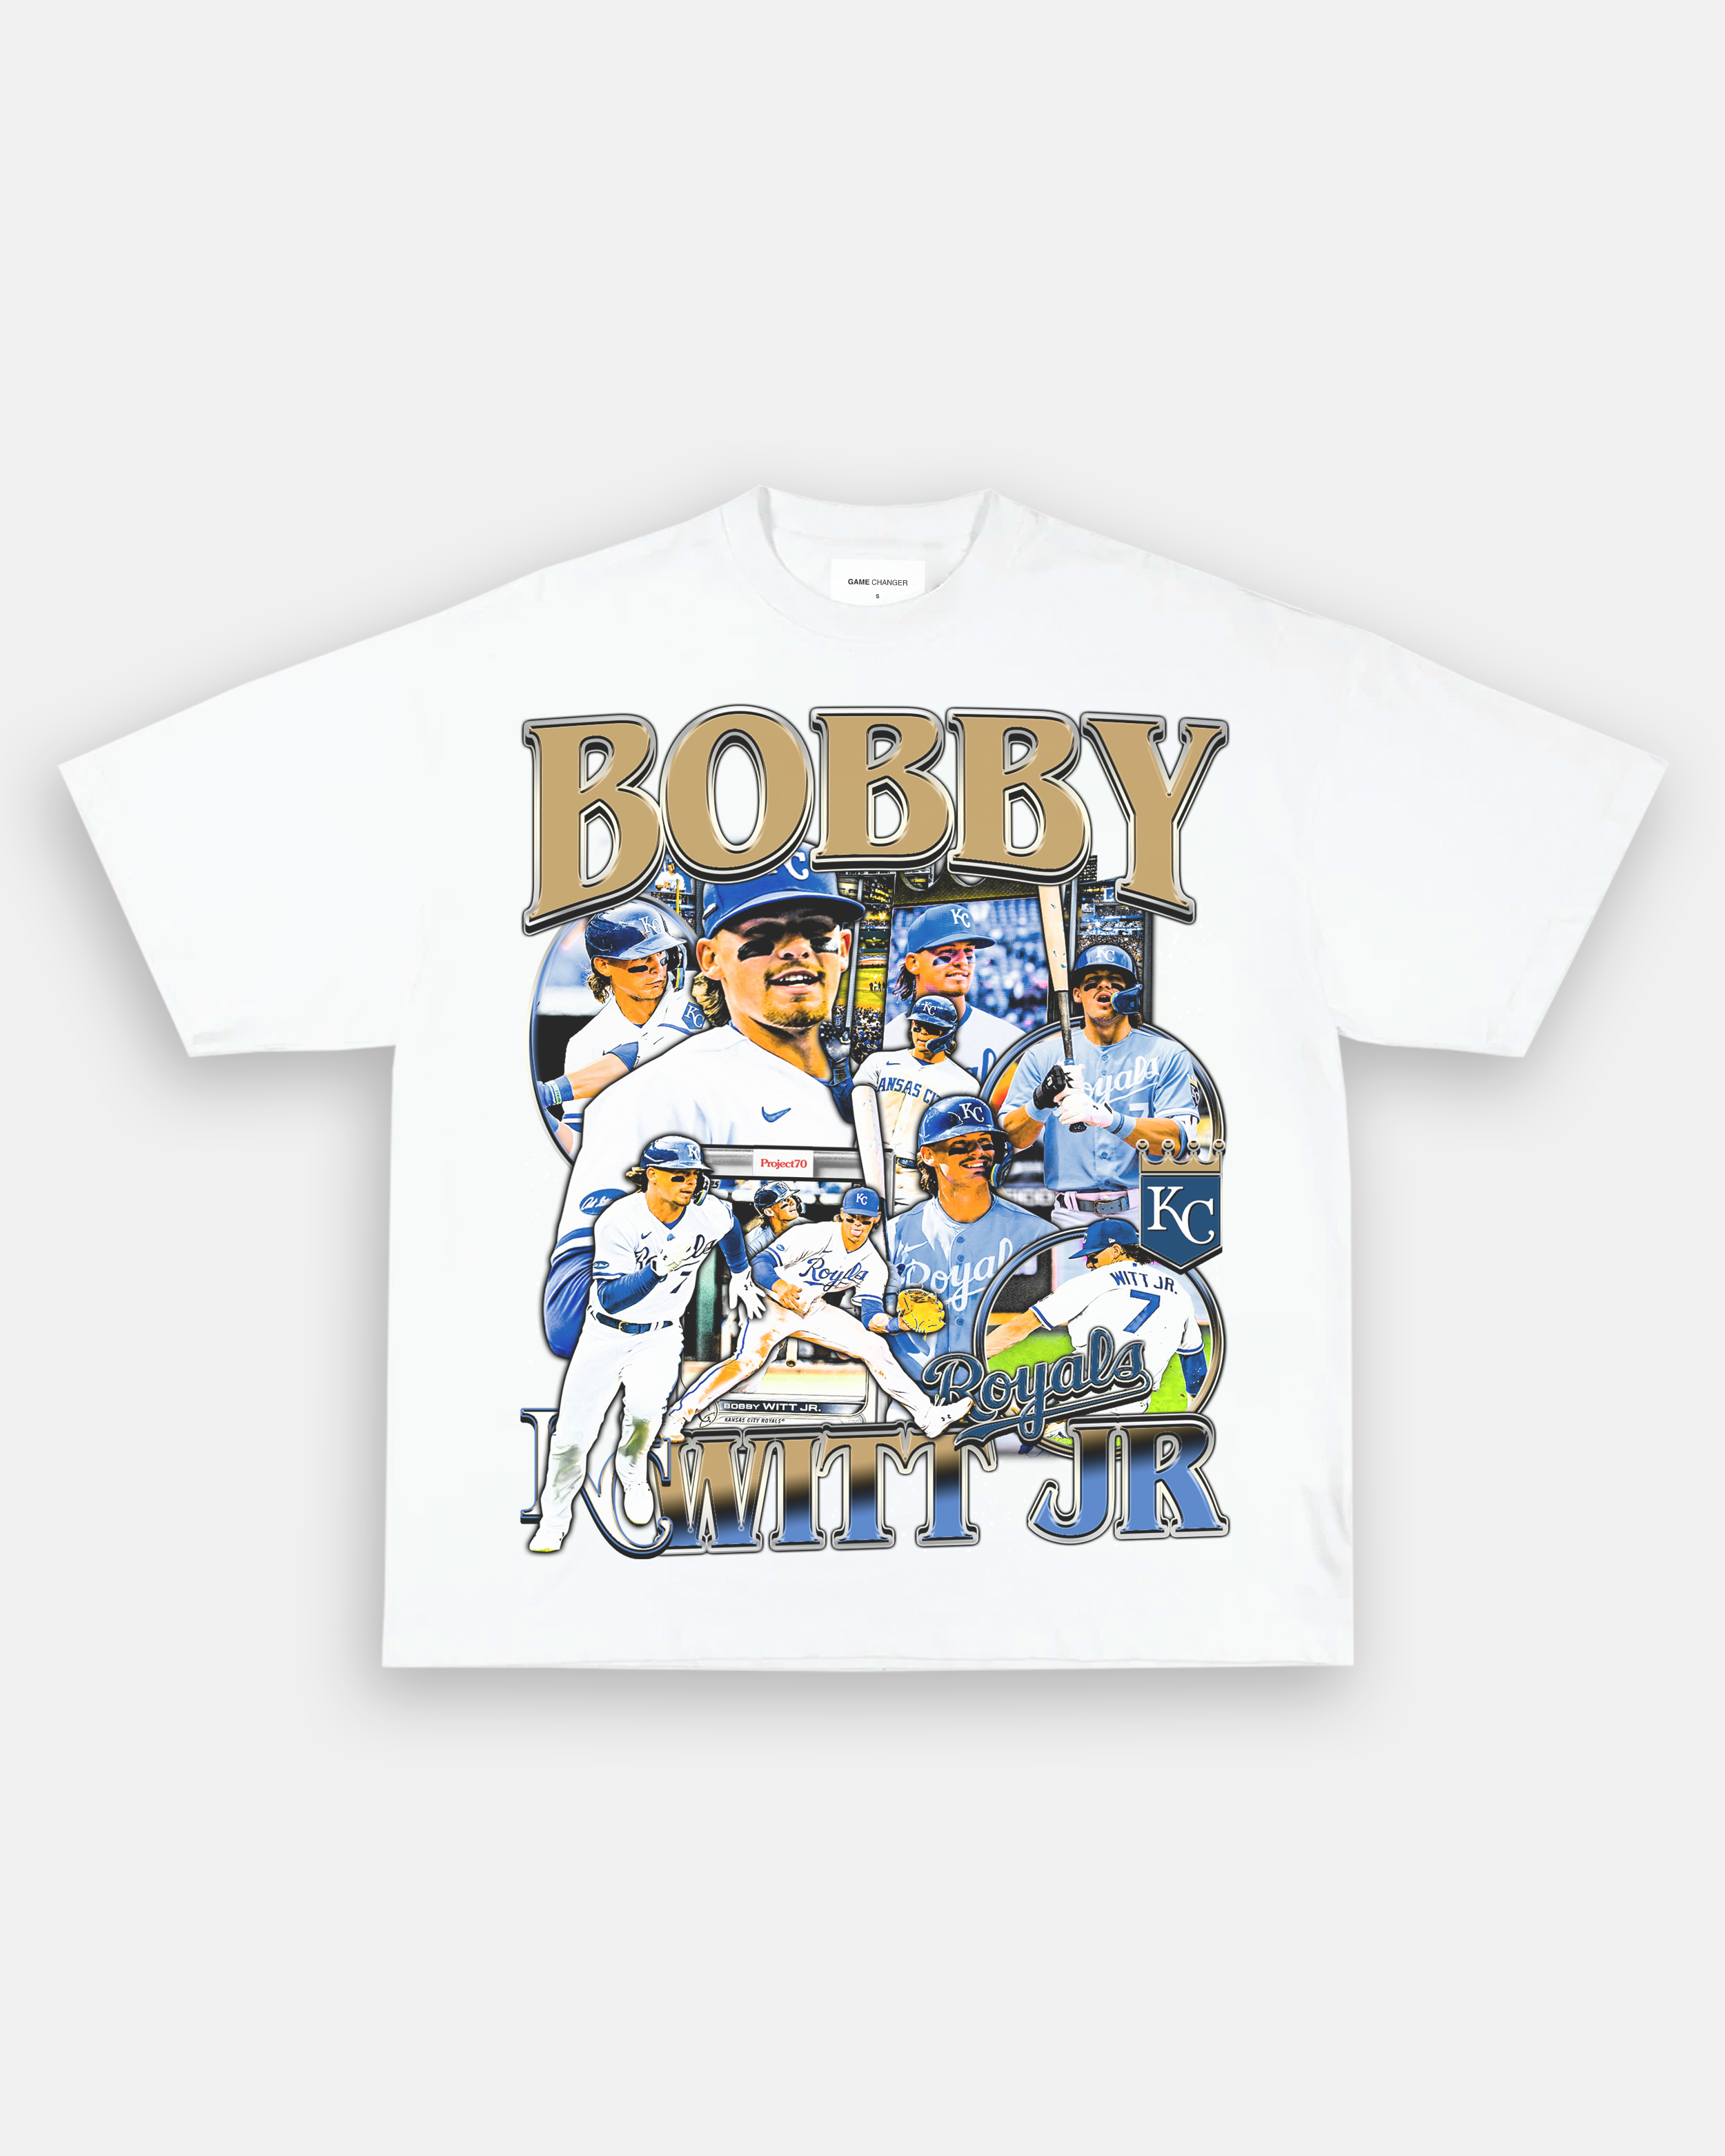 Bobby Witt Jr 30 40 T-Shirt, hoodie, longsleeve, sweatshirt, v-neck tee